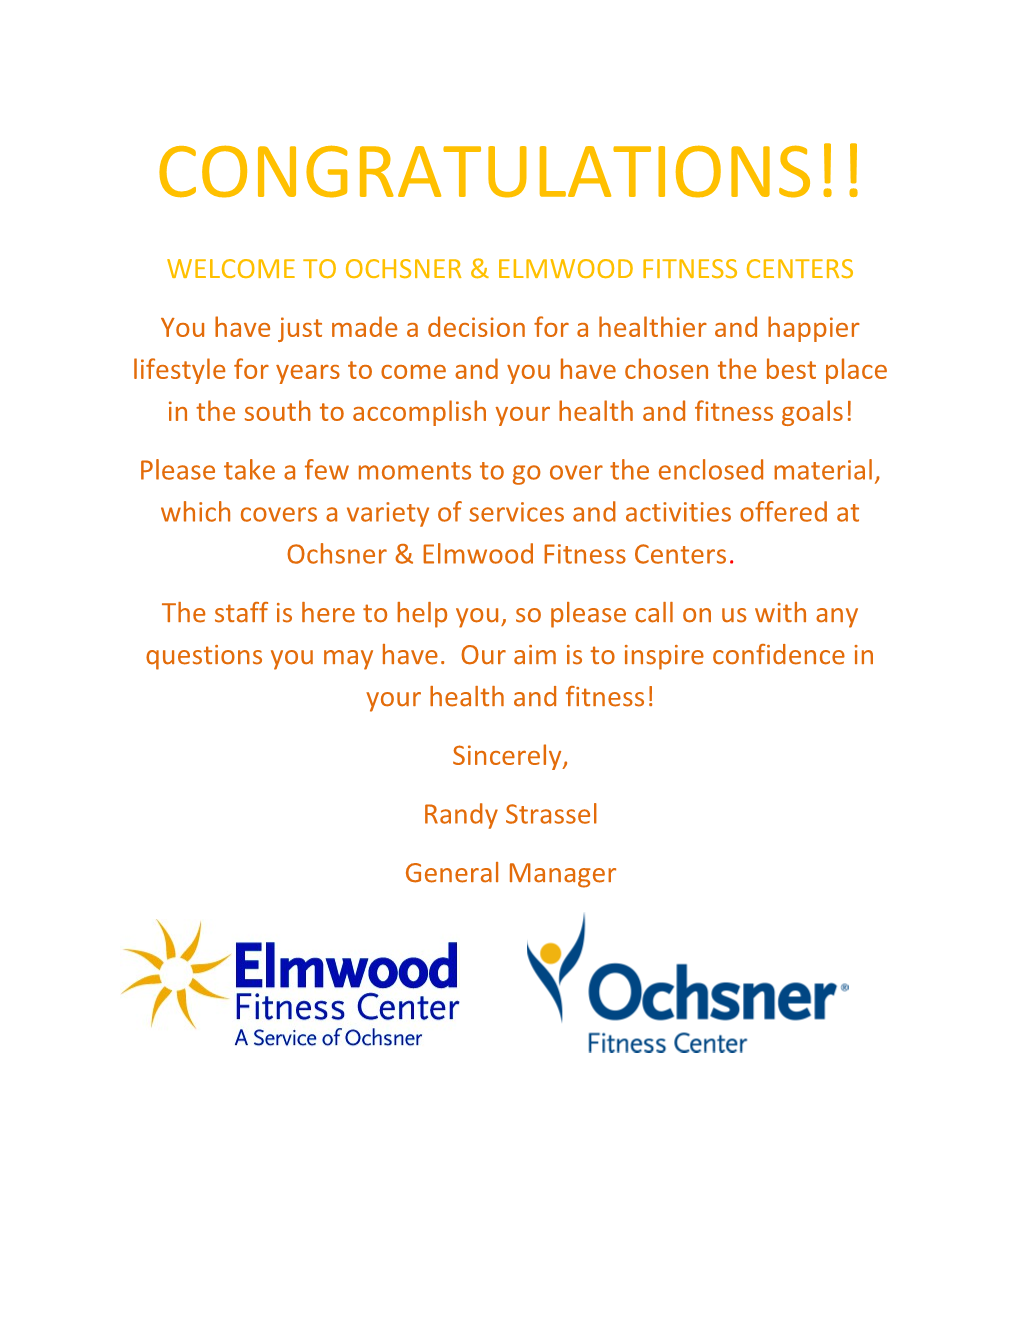 Welcome to Ochsner & Elmwood Fitness Centers